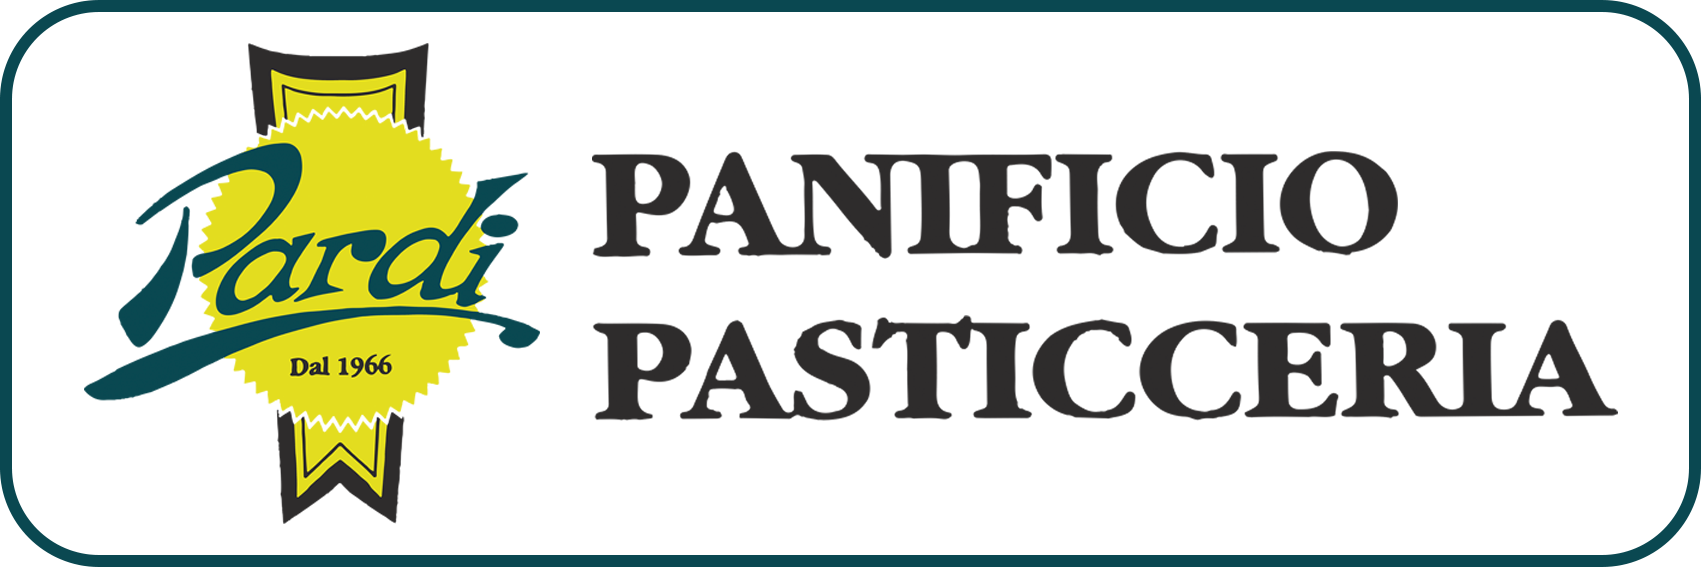 Panificio Pasticceria Pardi